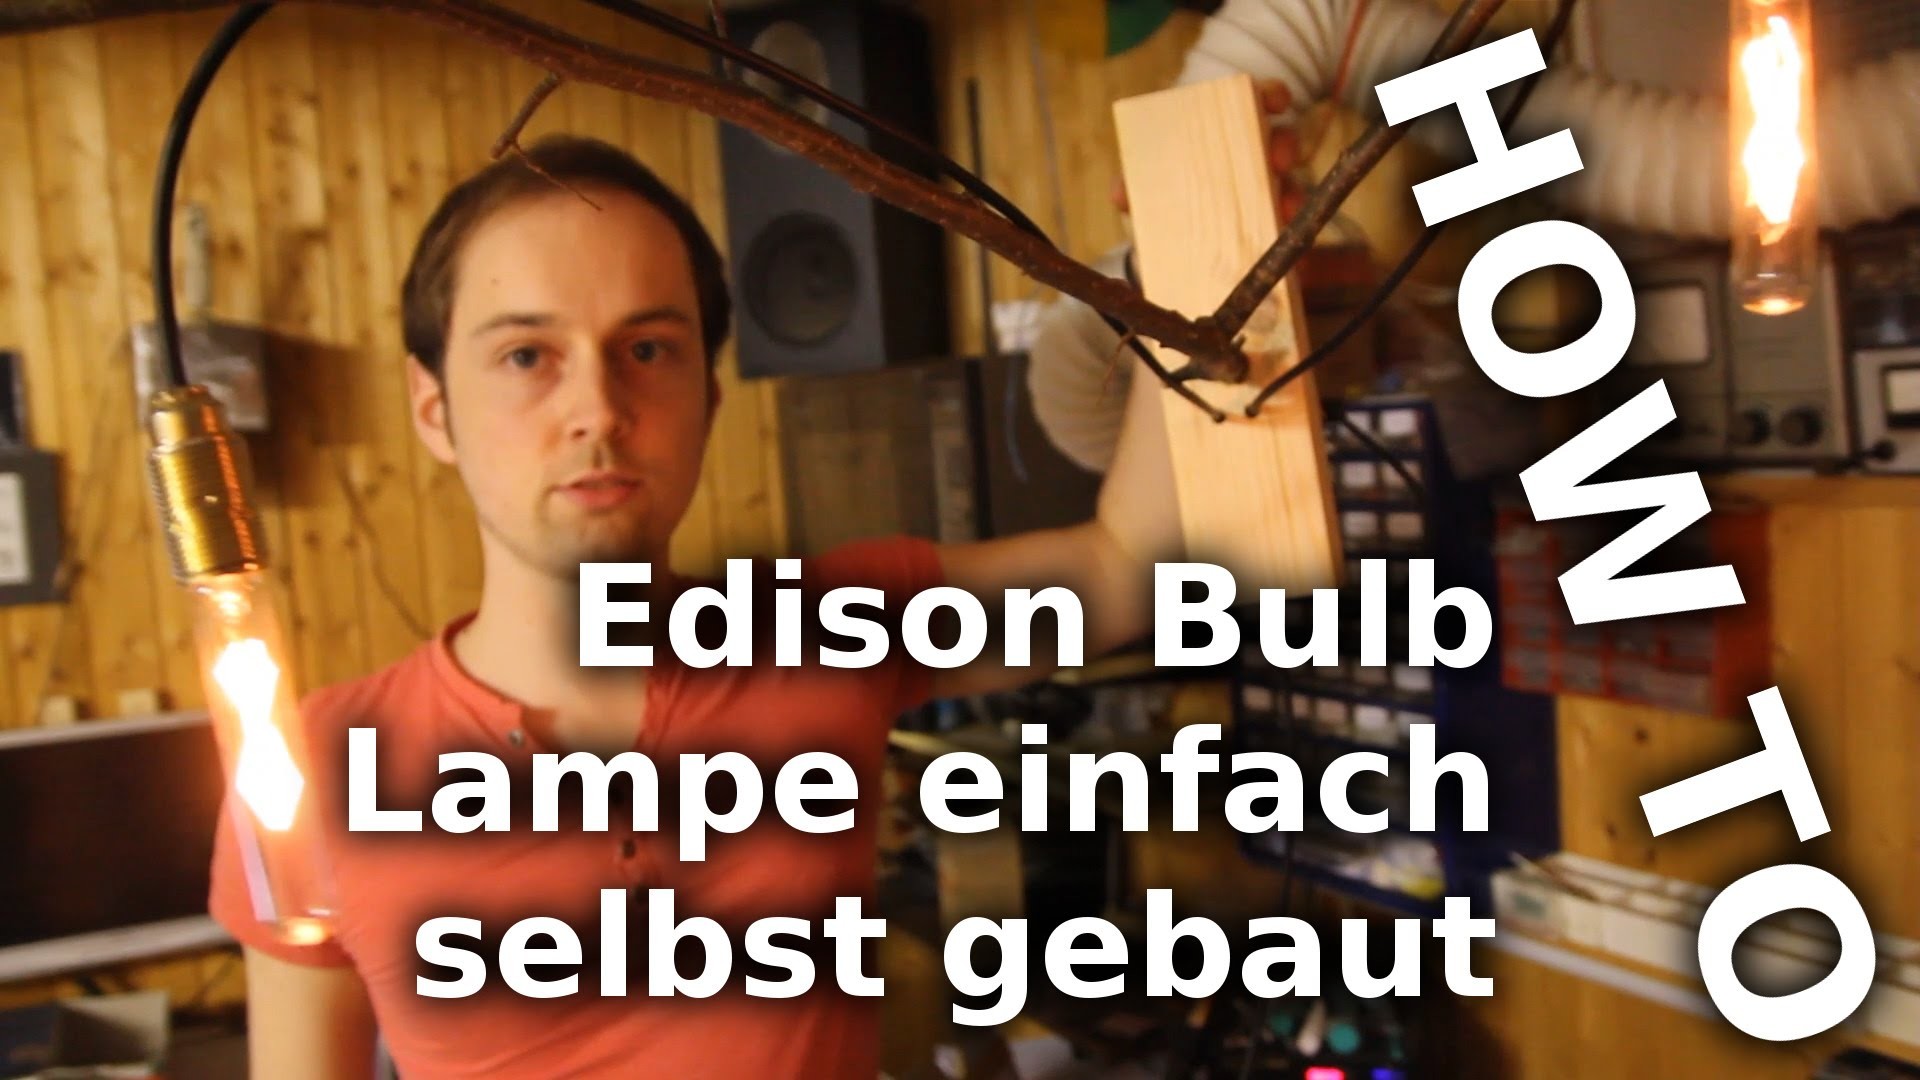 HOW TO: Edison Bulb Lampe einfach selbst gebaut (DIY)